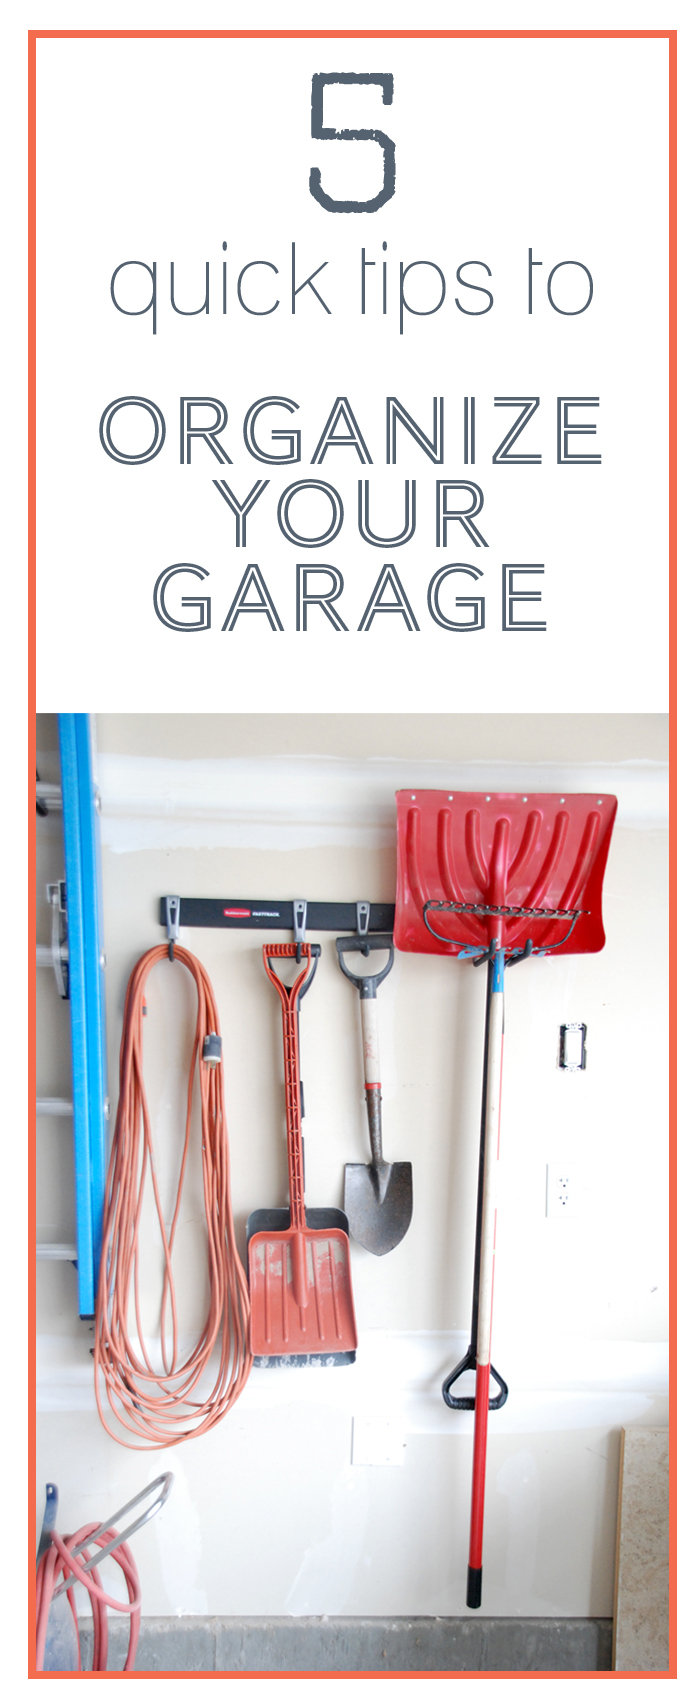 tips to organize garage - The Creative Mom